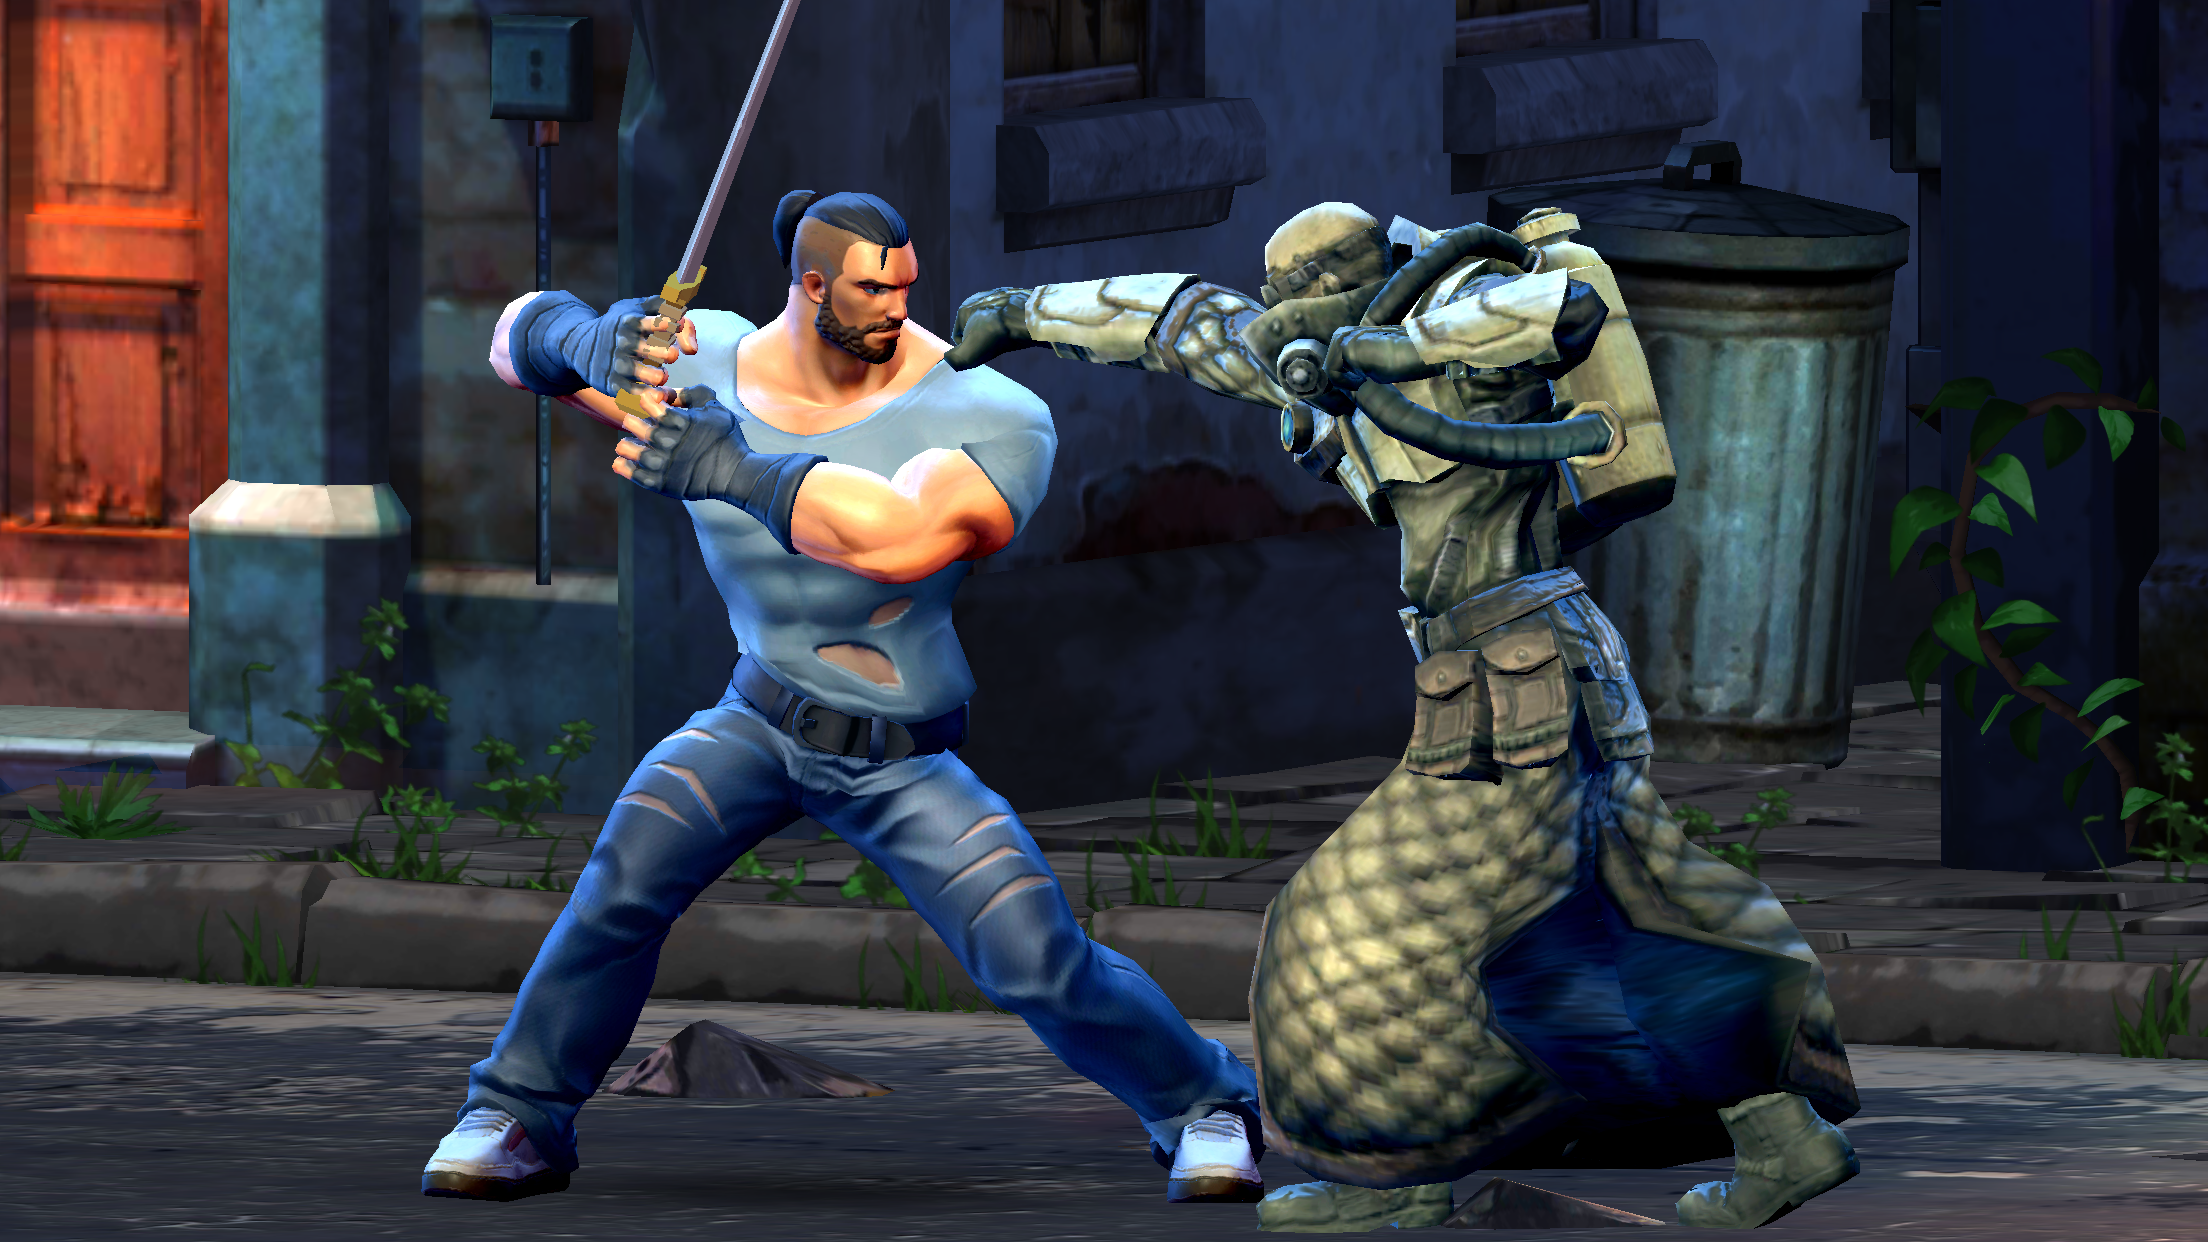 Screenshot 1 of Street Warrior Ninja - เกมซามูไรต่อสู้ 2019 1.36